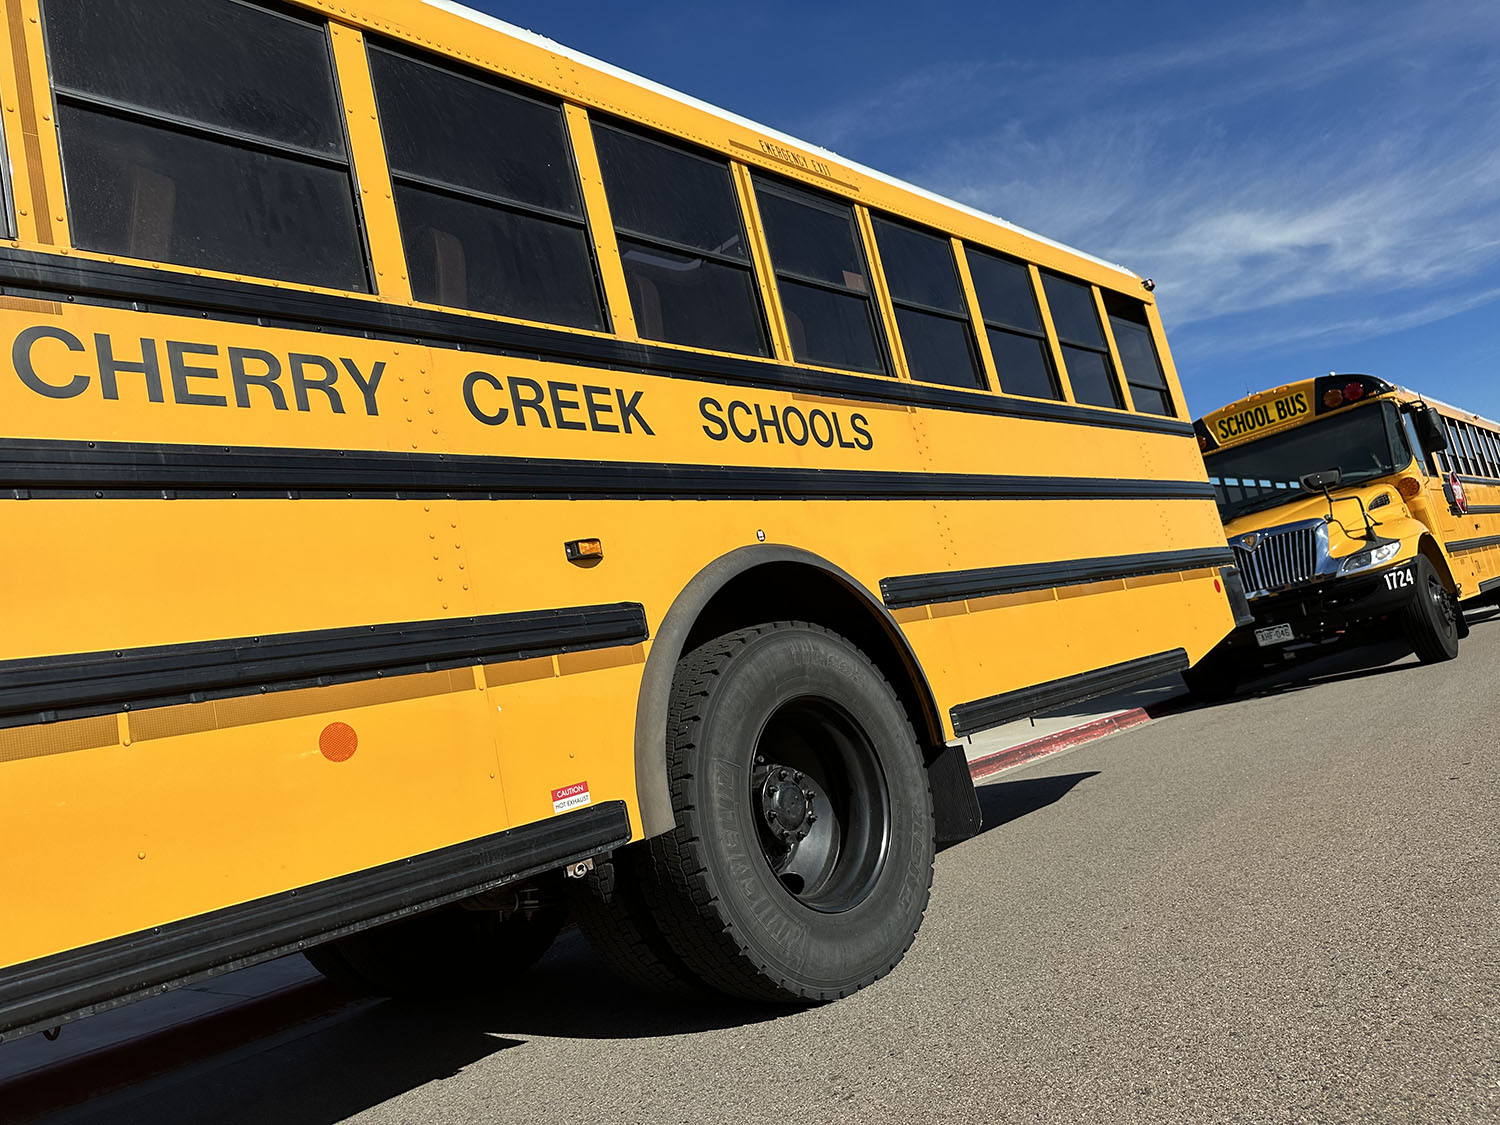 Cherry Creek School buses.